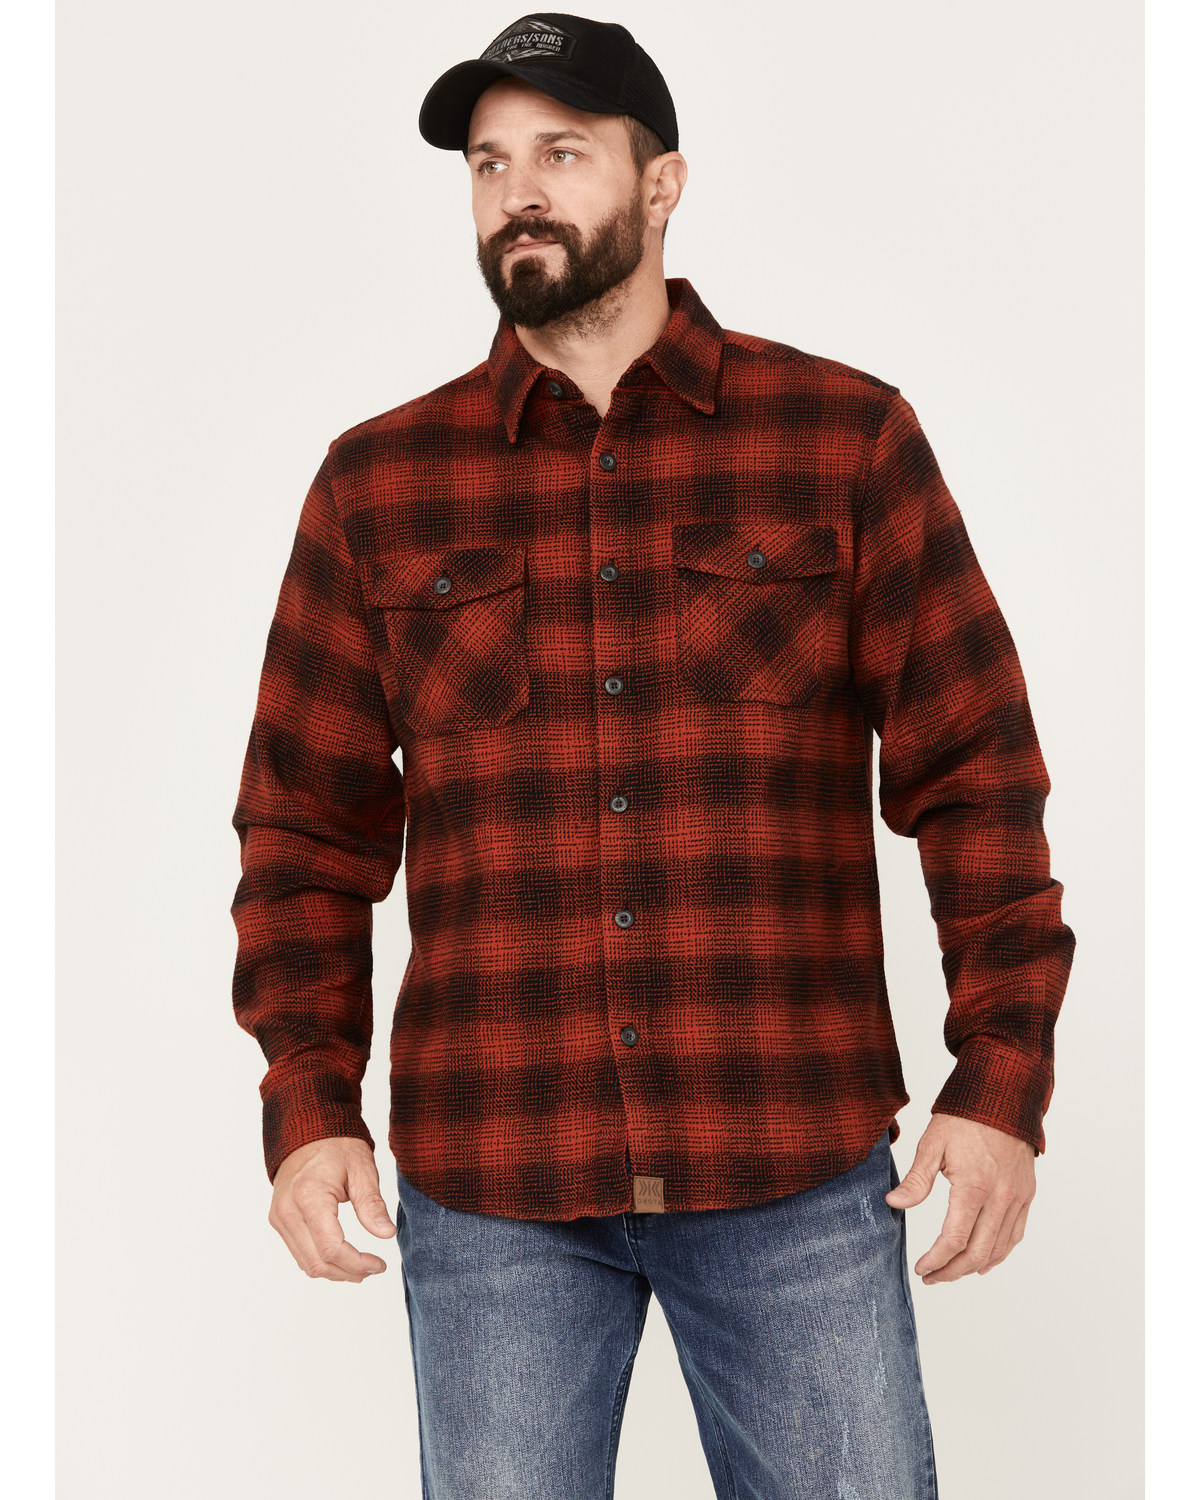 Dakota Grizzly Men's Briggs Plaid Print Button Down Heavy Western Flannel Shirt